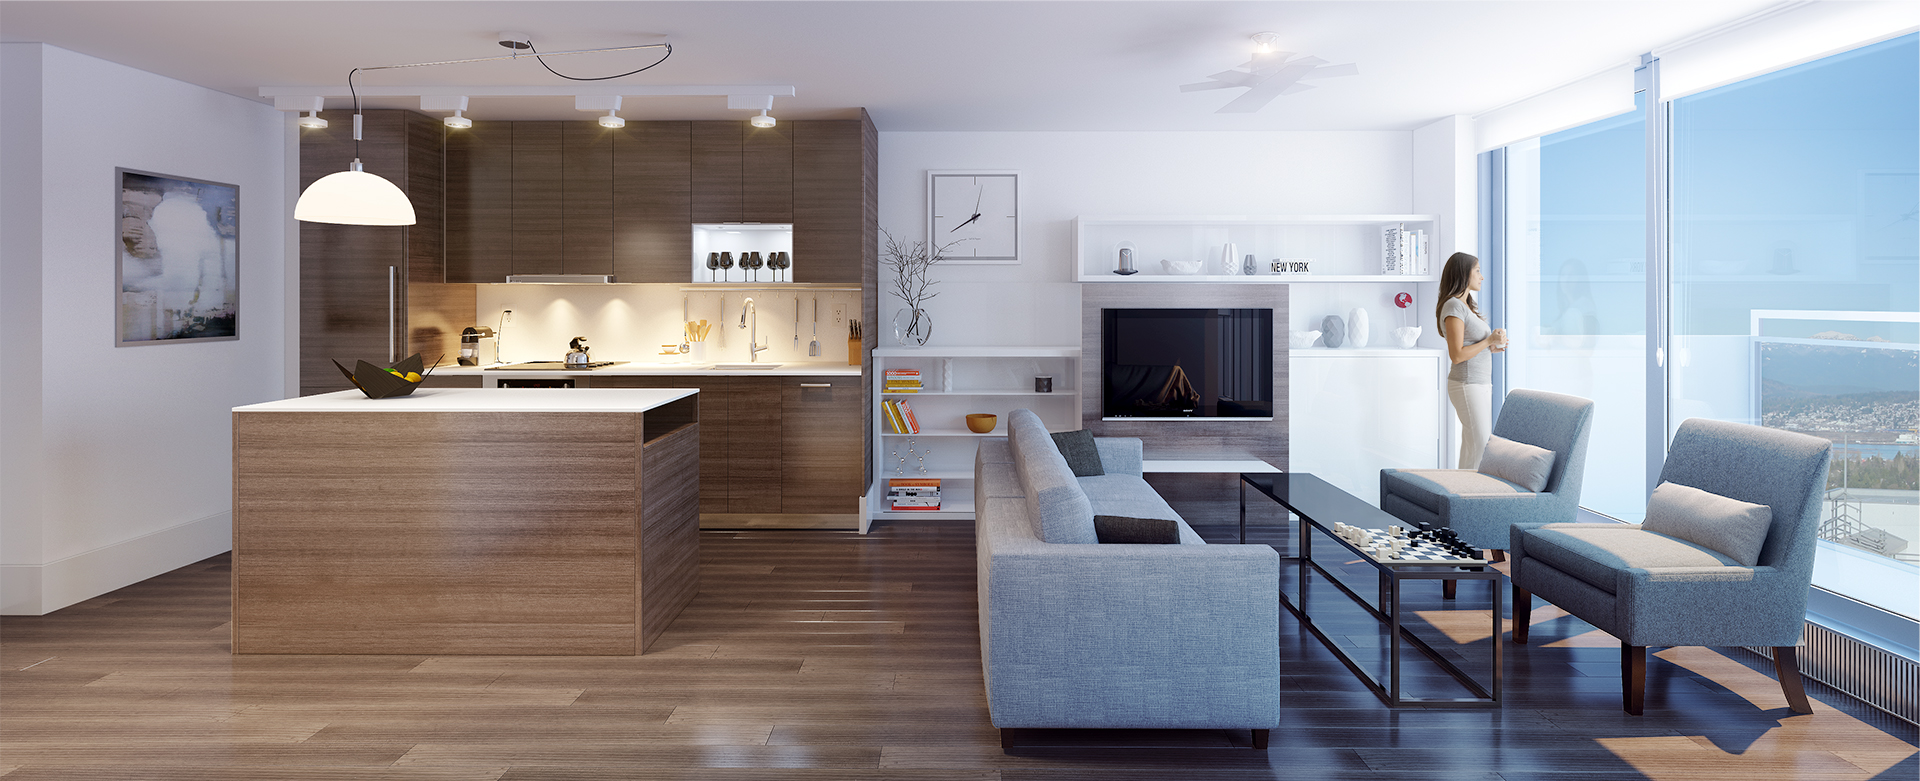 small kitchen lounge design